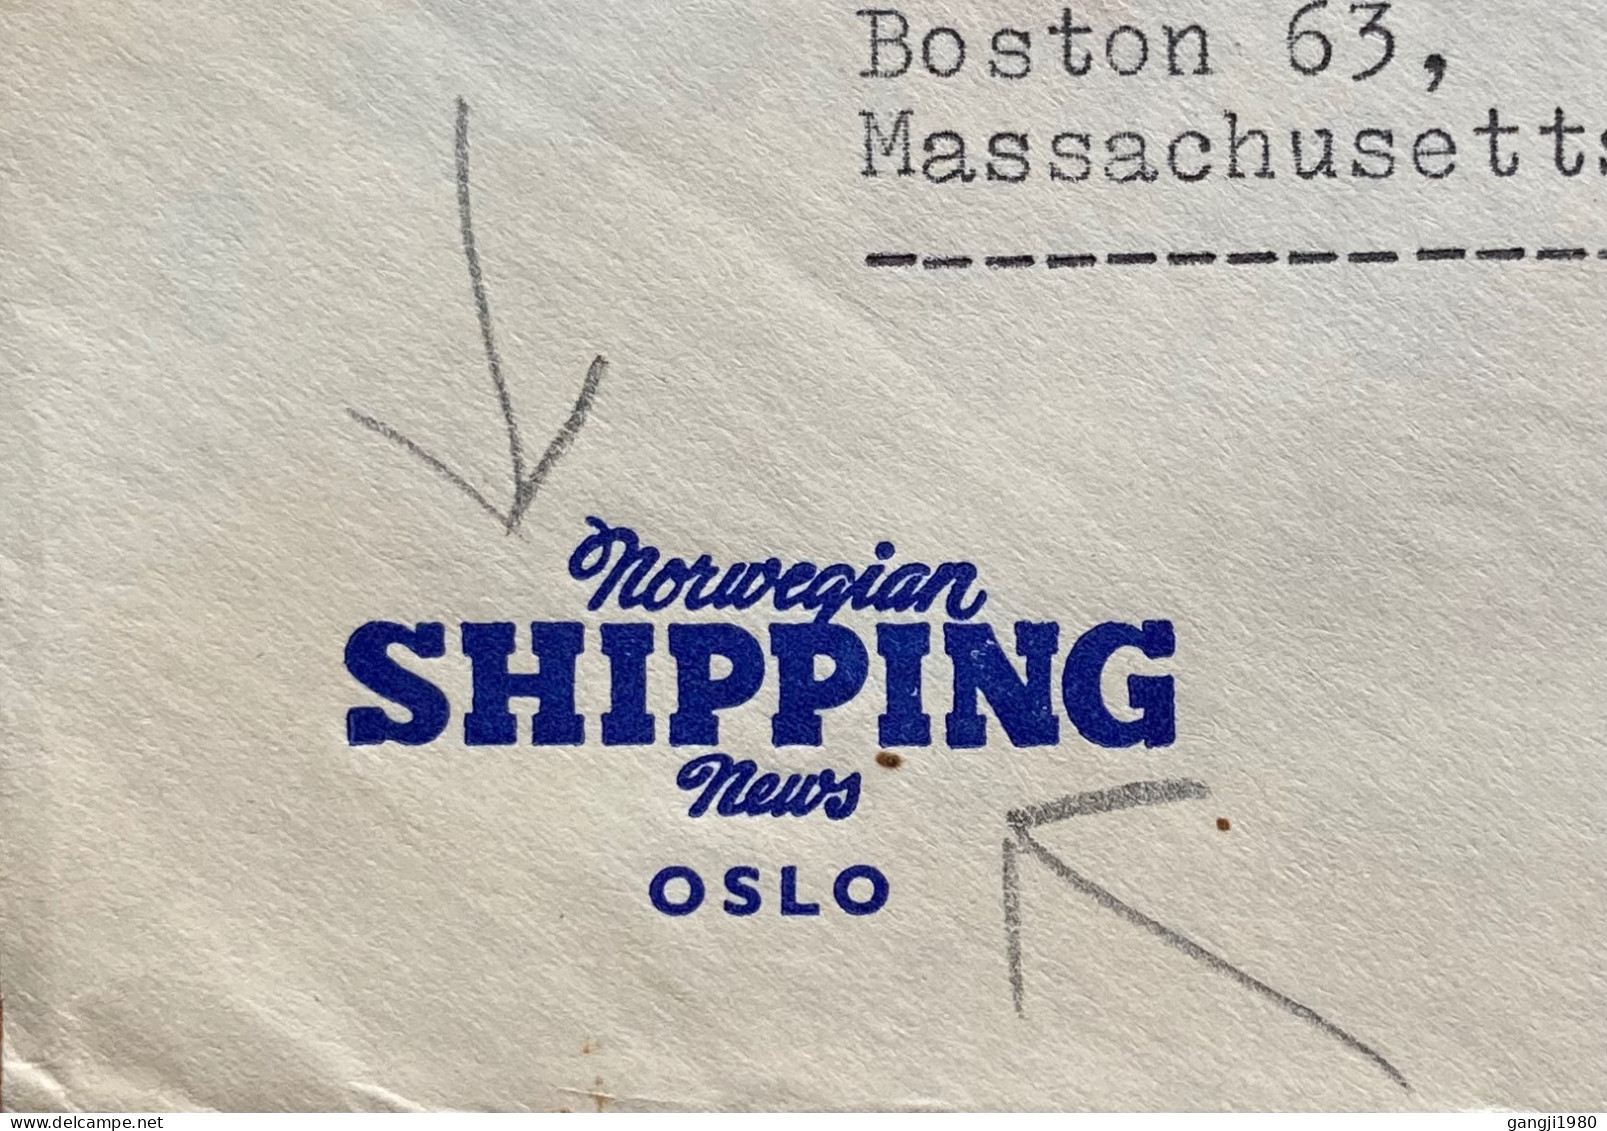 NORWAY 1956, COVER USED TO USA, NORWEGIAN SHIPPING NEWS, MACHINE SLOGAN, KJOP LODDI REISE LOTTENS LOTTERI, KING HAAKON S - Covers & Documents